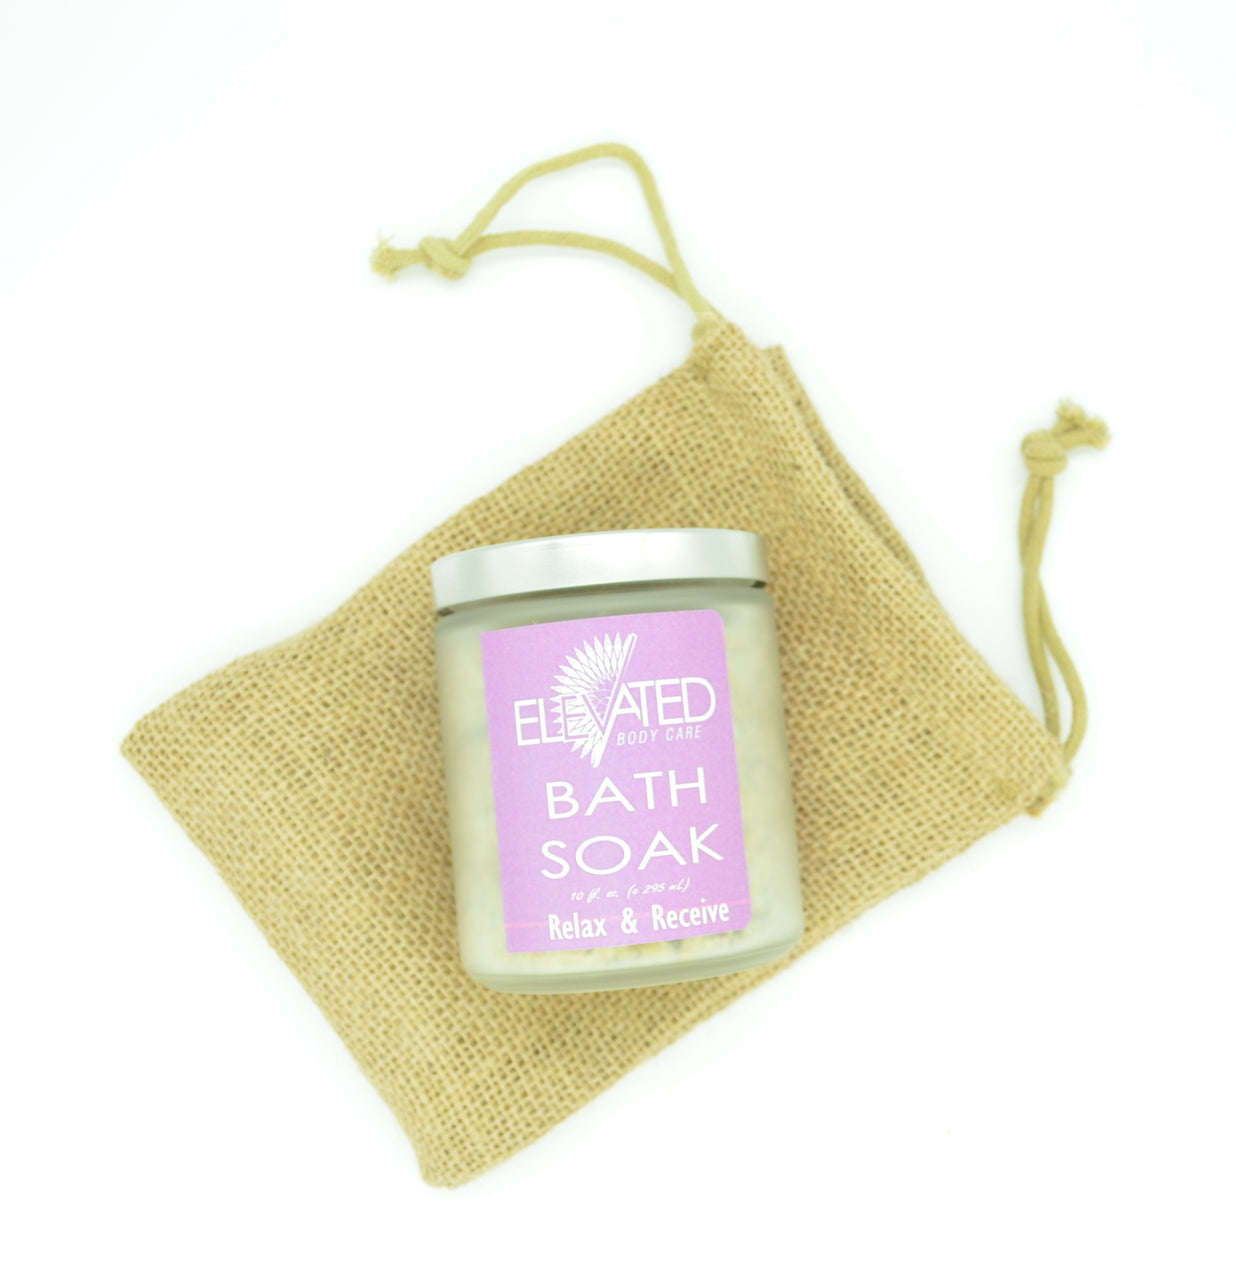 Choose between 4 Relaxing Bath Soak scents!